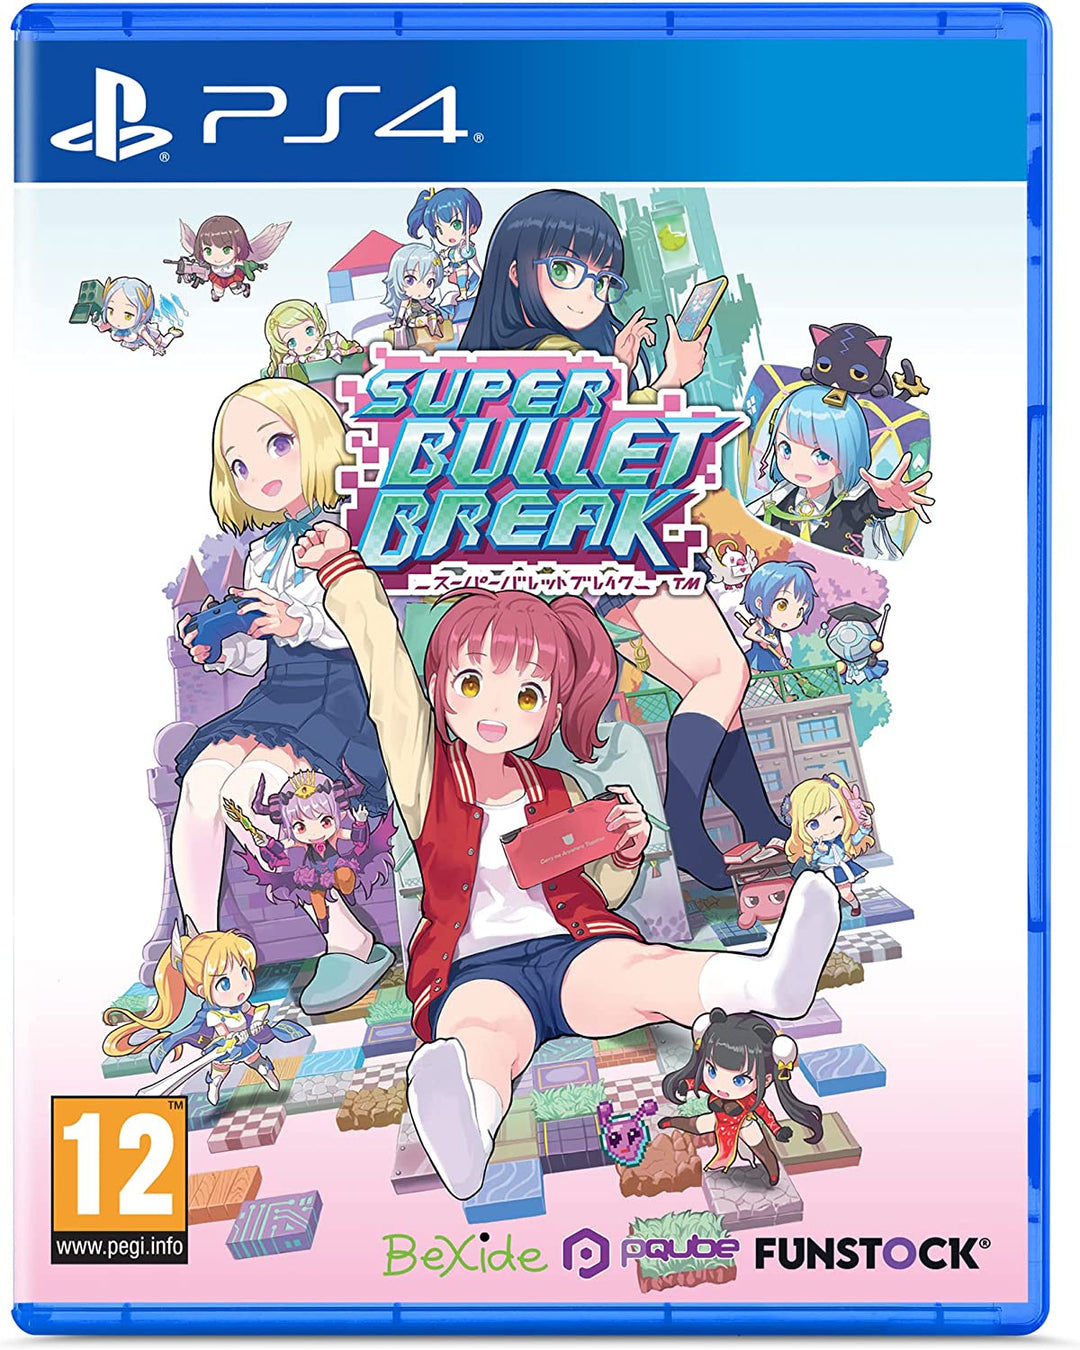 Super Bullet Break Day 1 Edition PS4